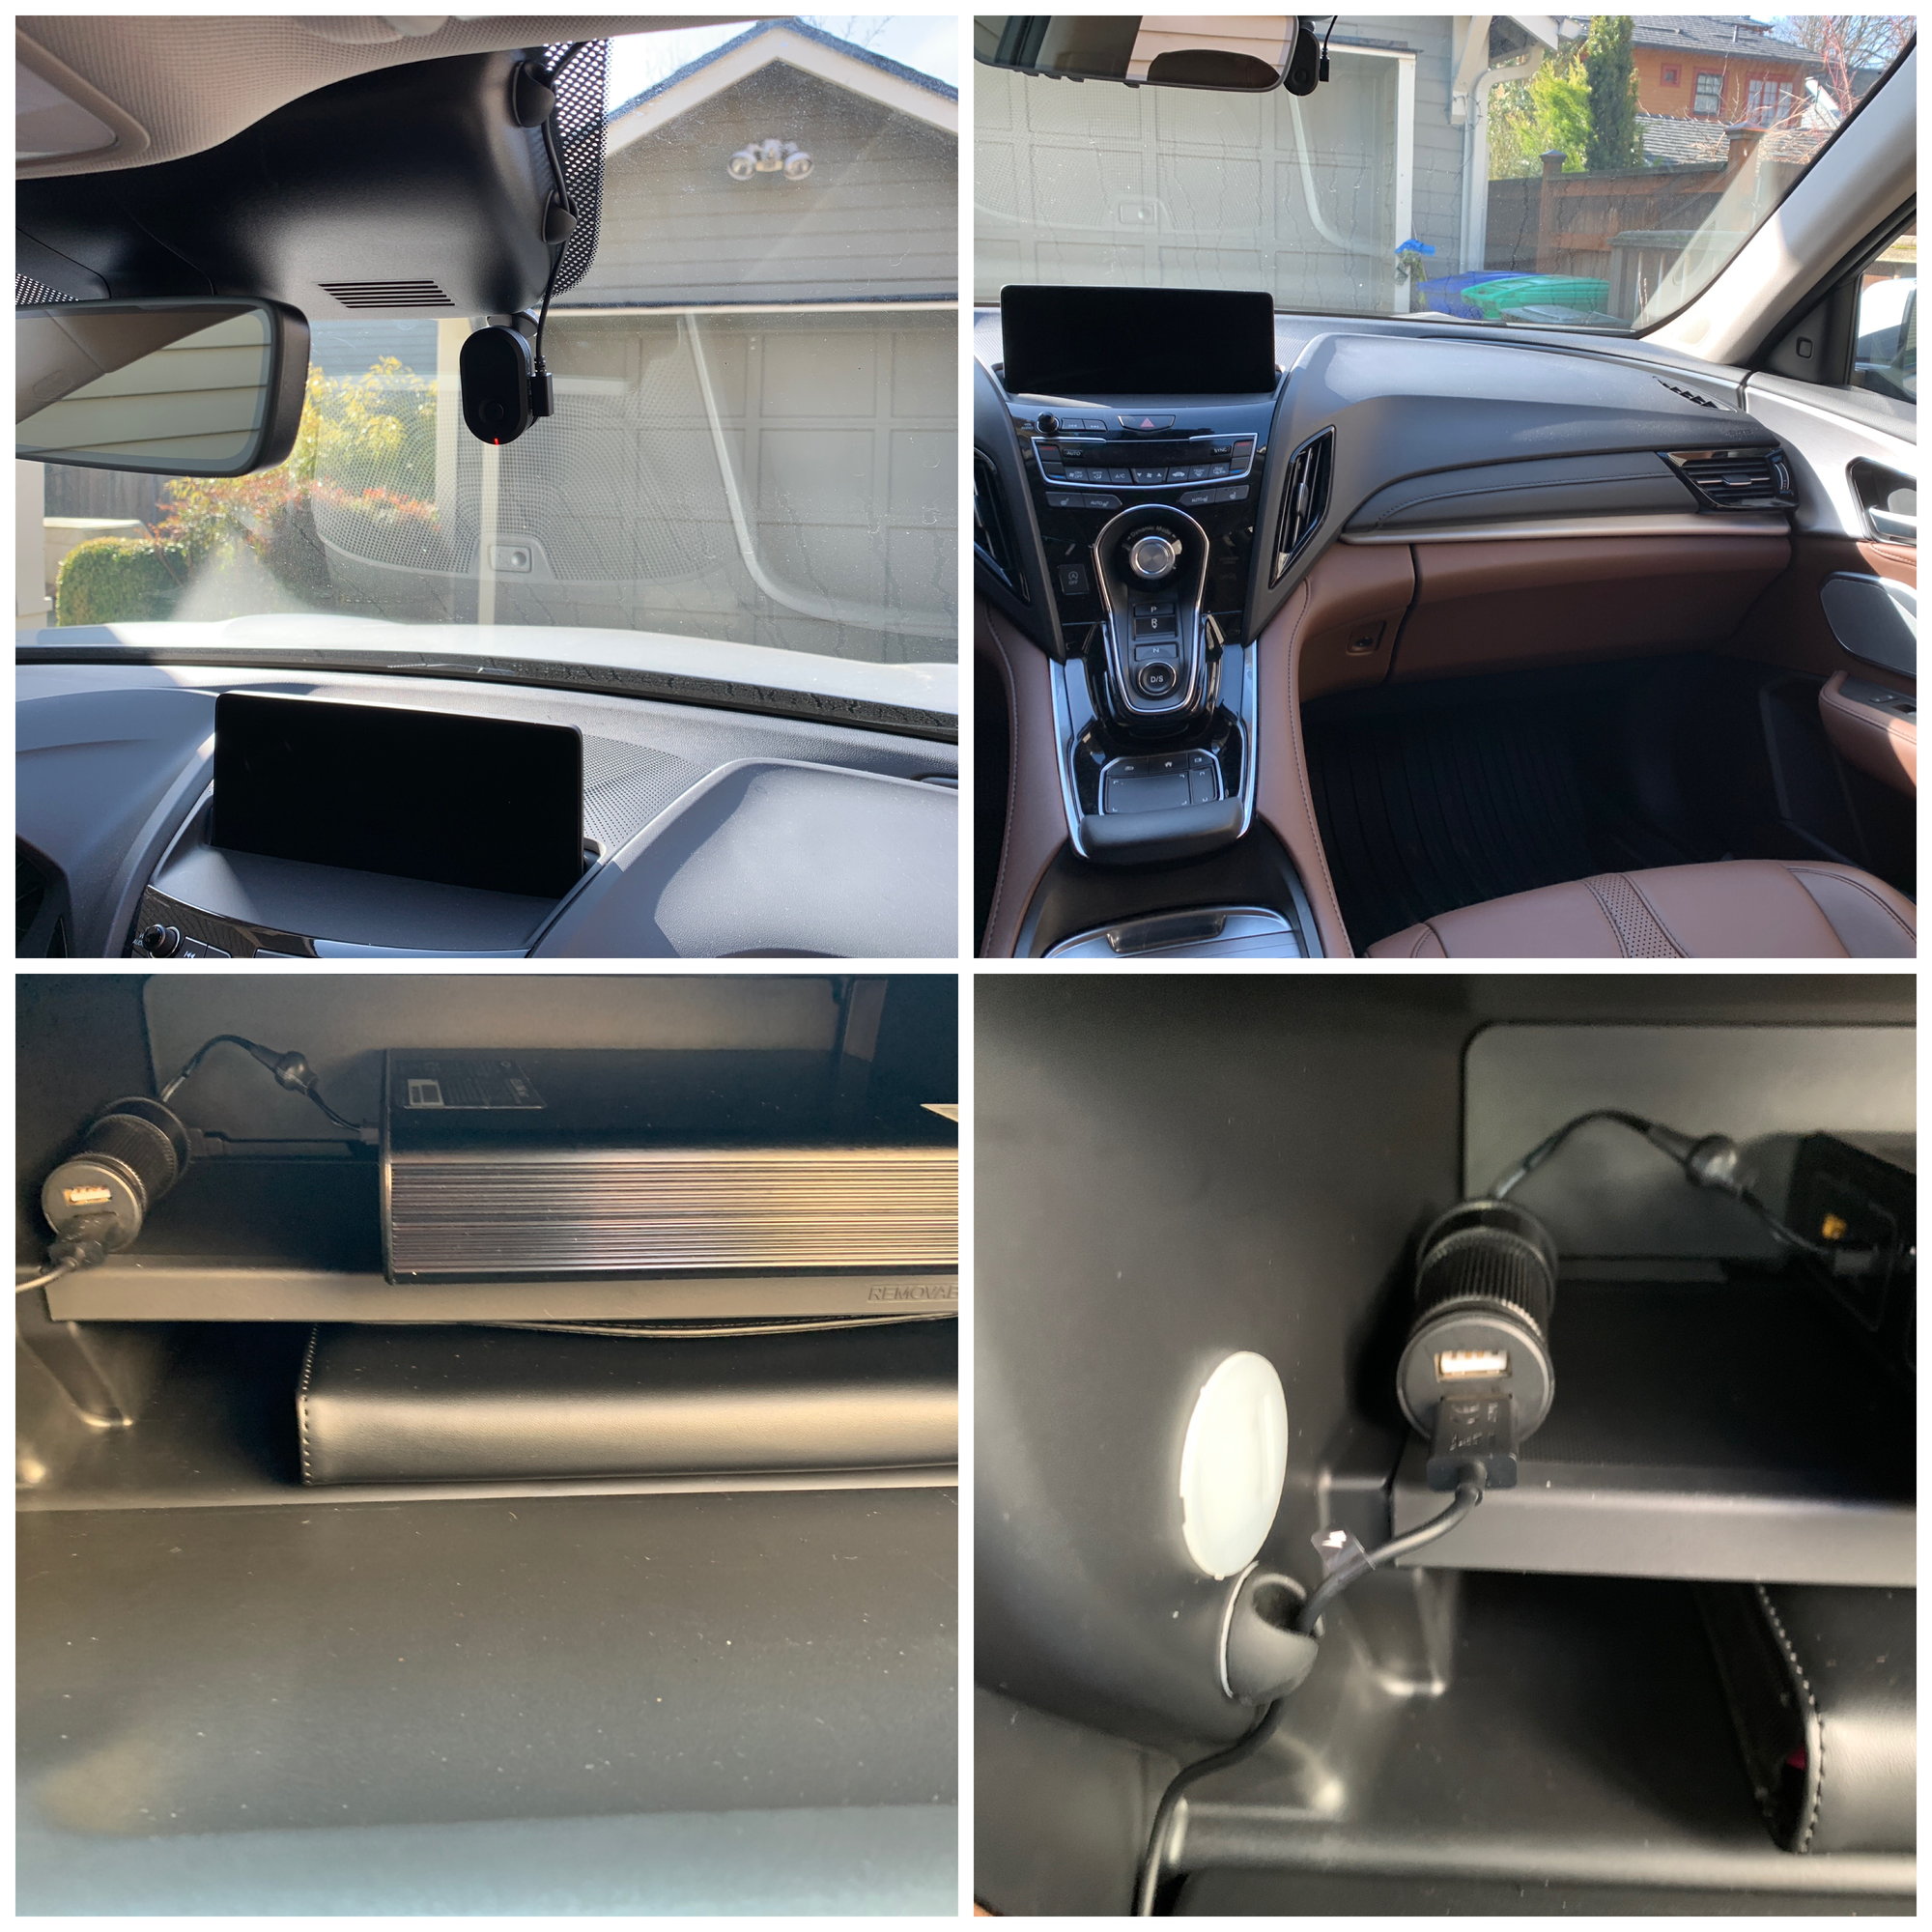 DIY Install of Garmin Mini Dash cam and Cellink Neo - AcuraZine